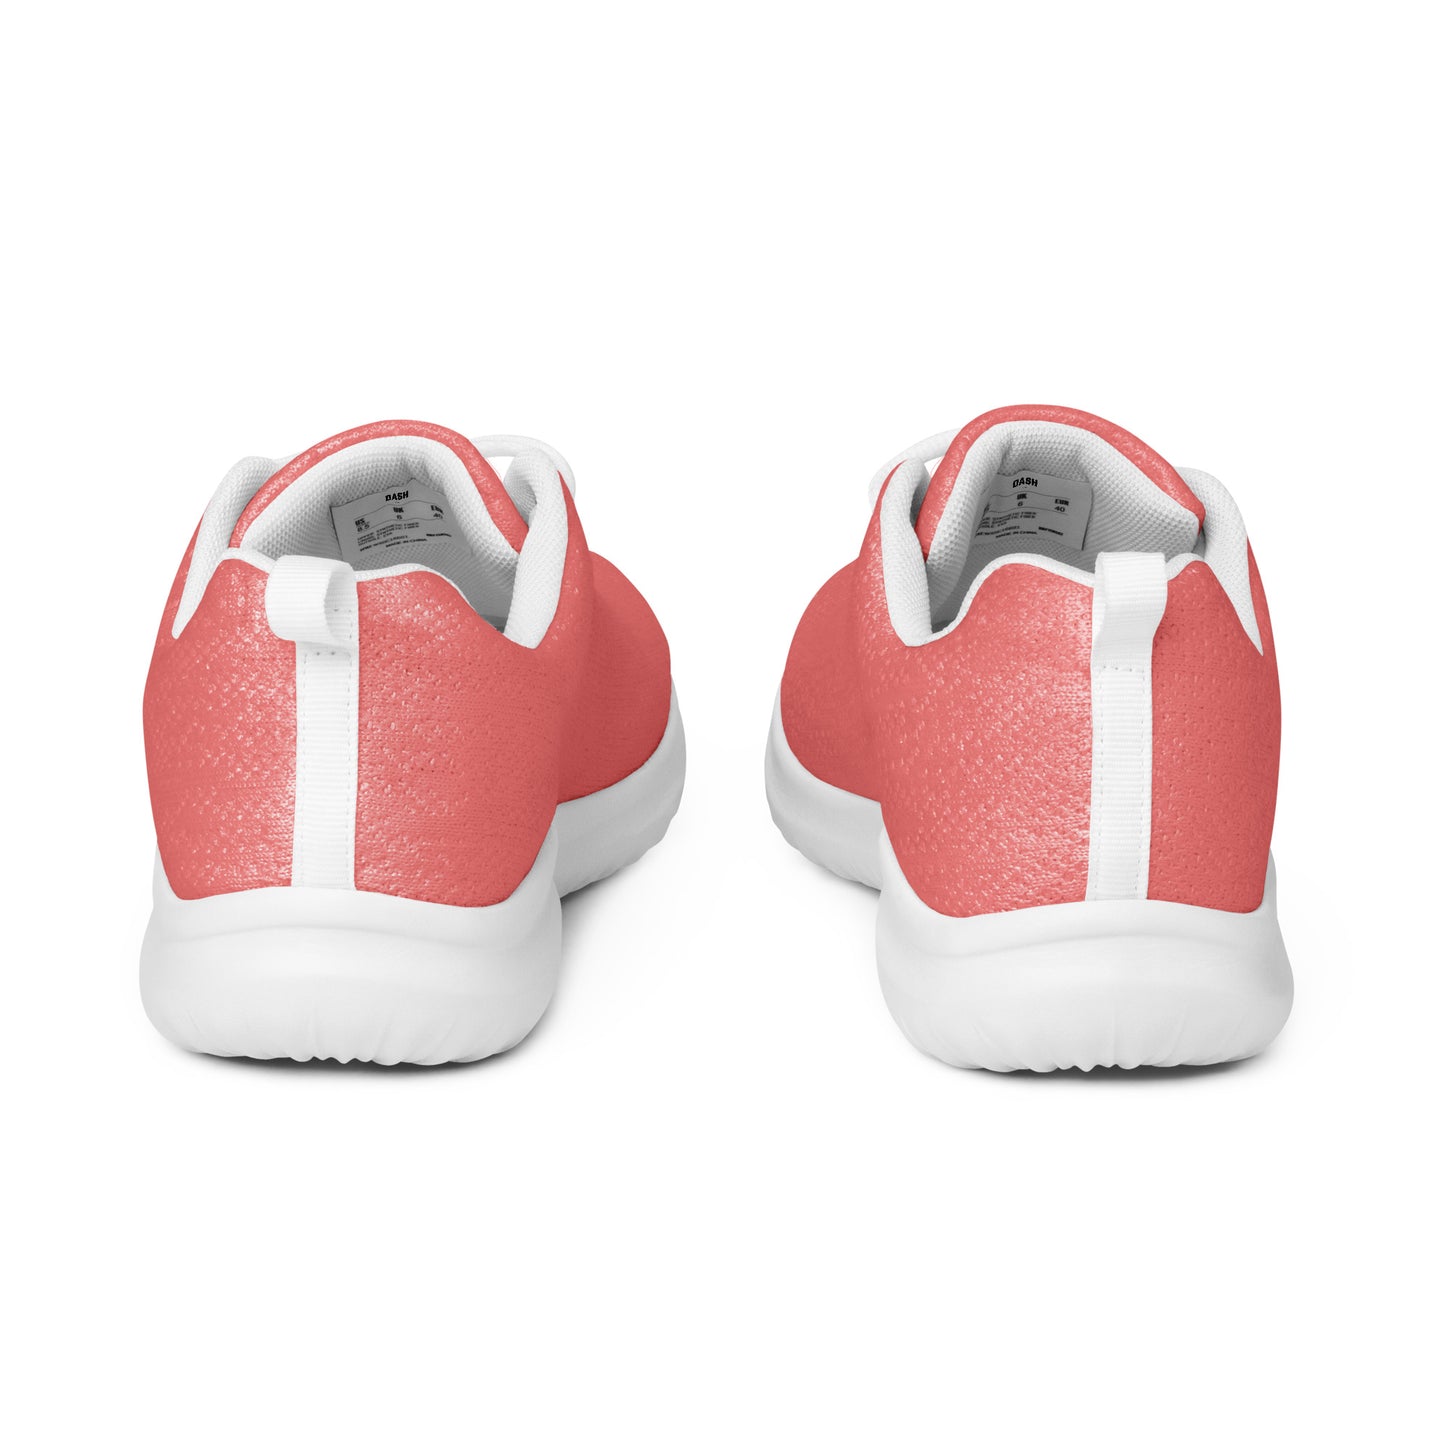 DASH Salmon Women’s Athletic Shoes Lightweight Breathable Design by IOBI Original Apparel